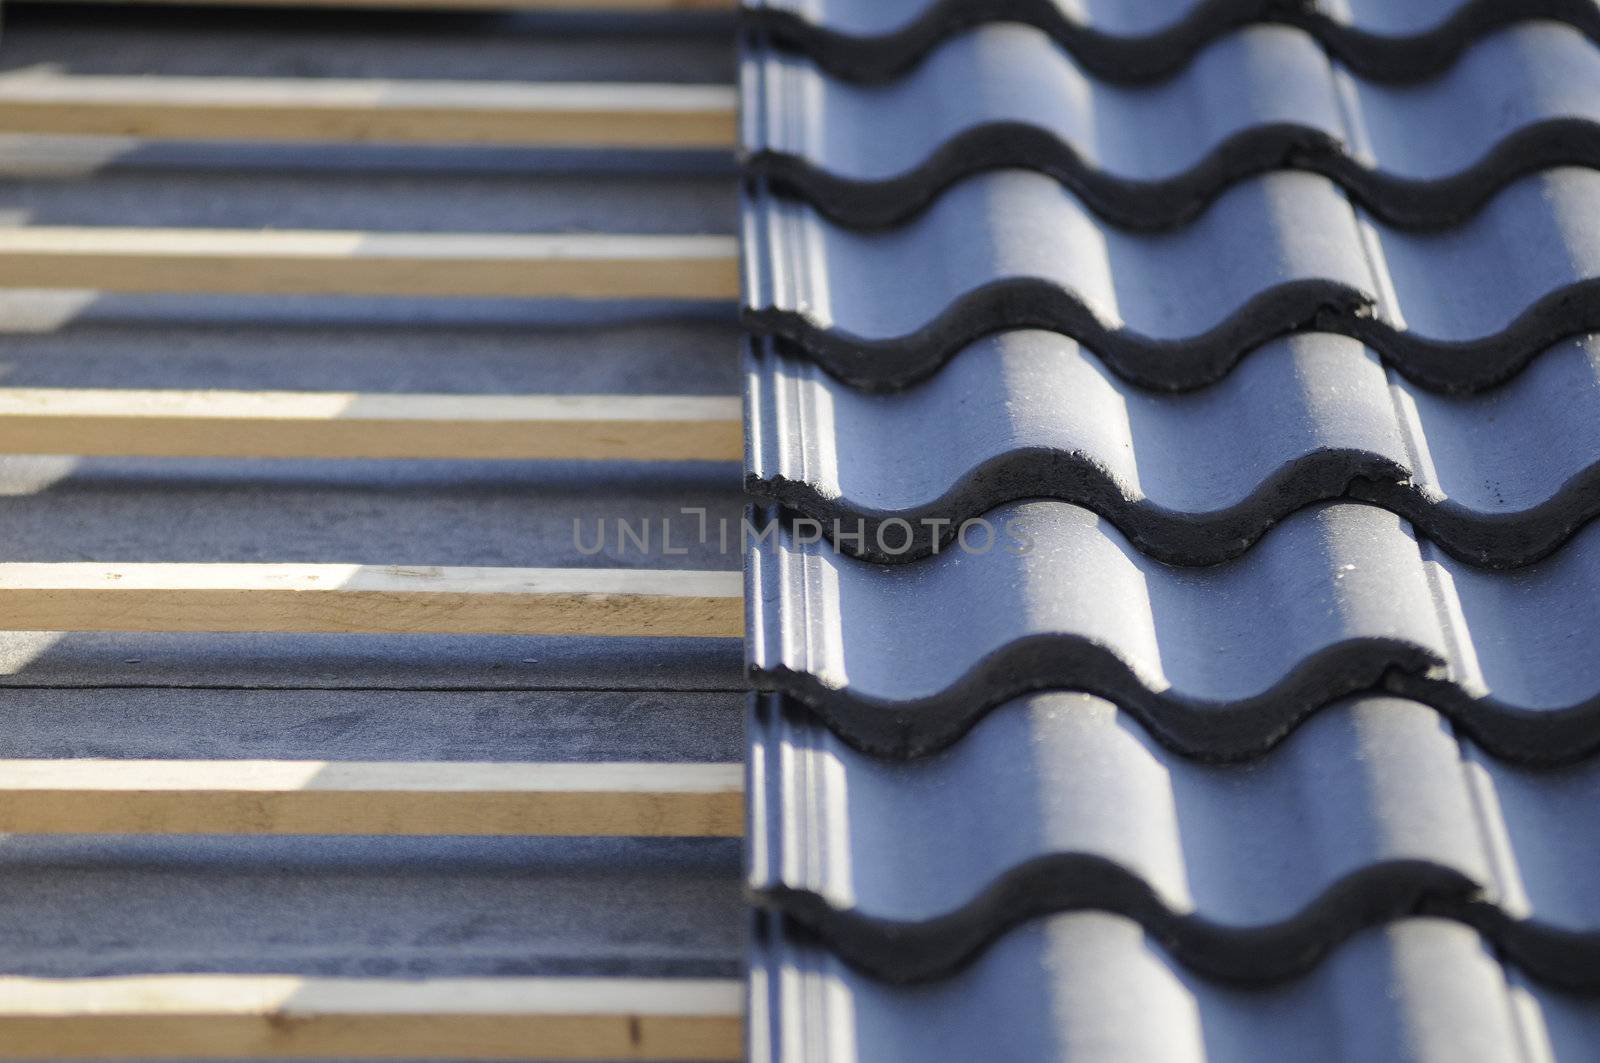 descriptive image of tile roofing